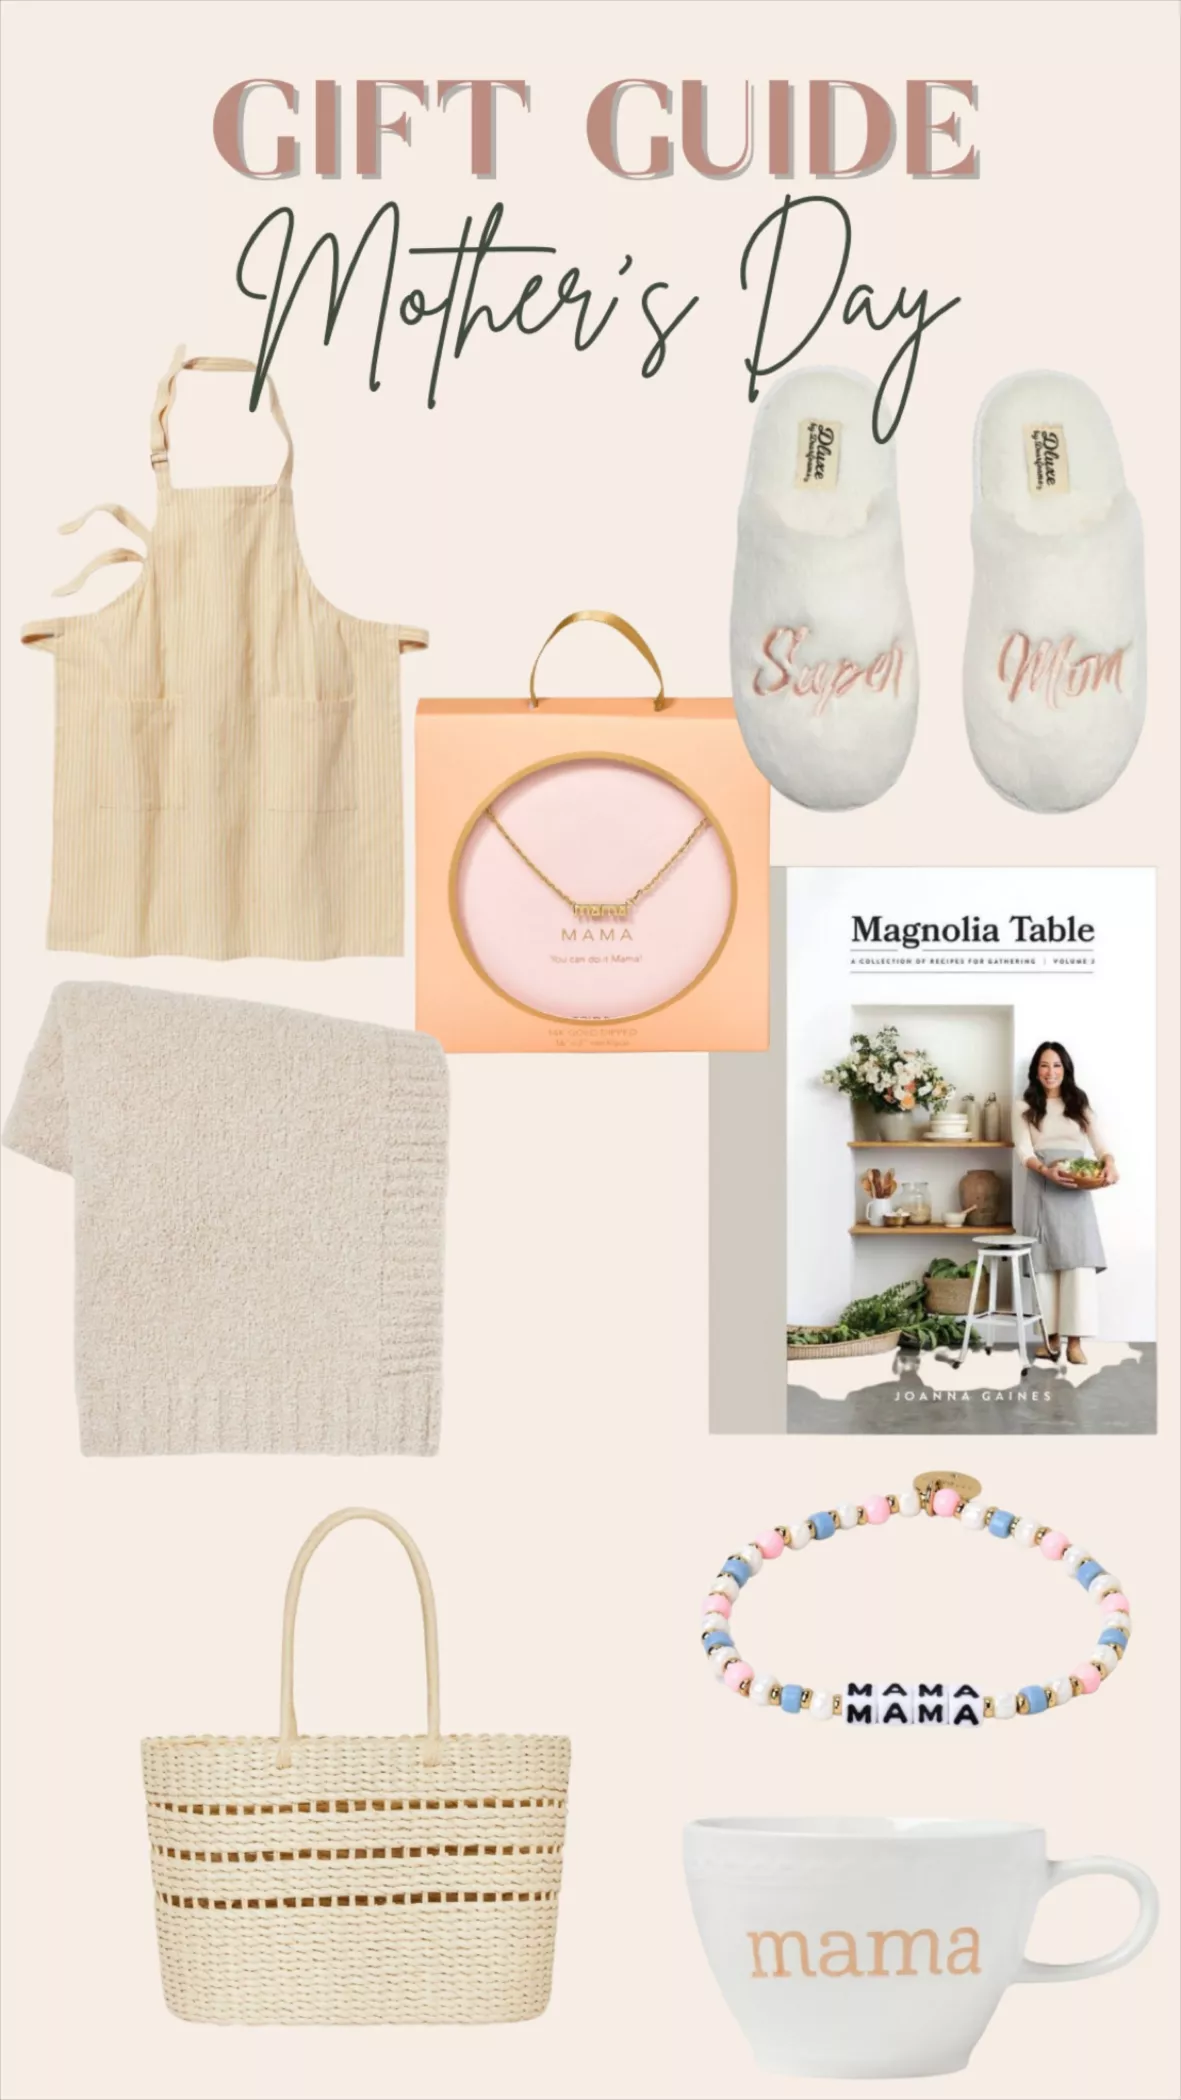 Magnolia Mamas : Tween/Teen Girl Gift Guide